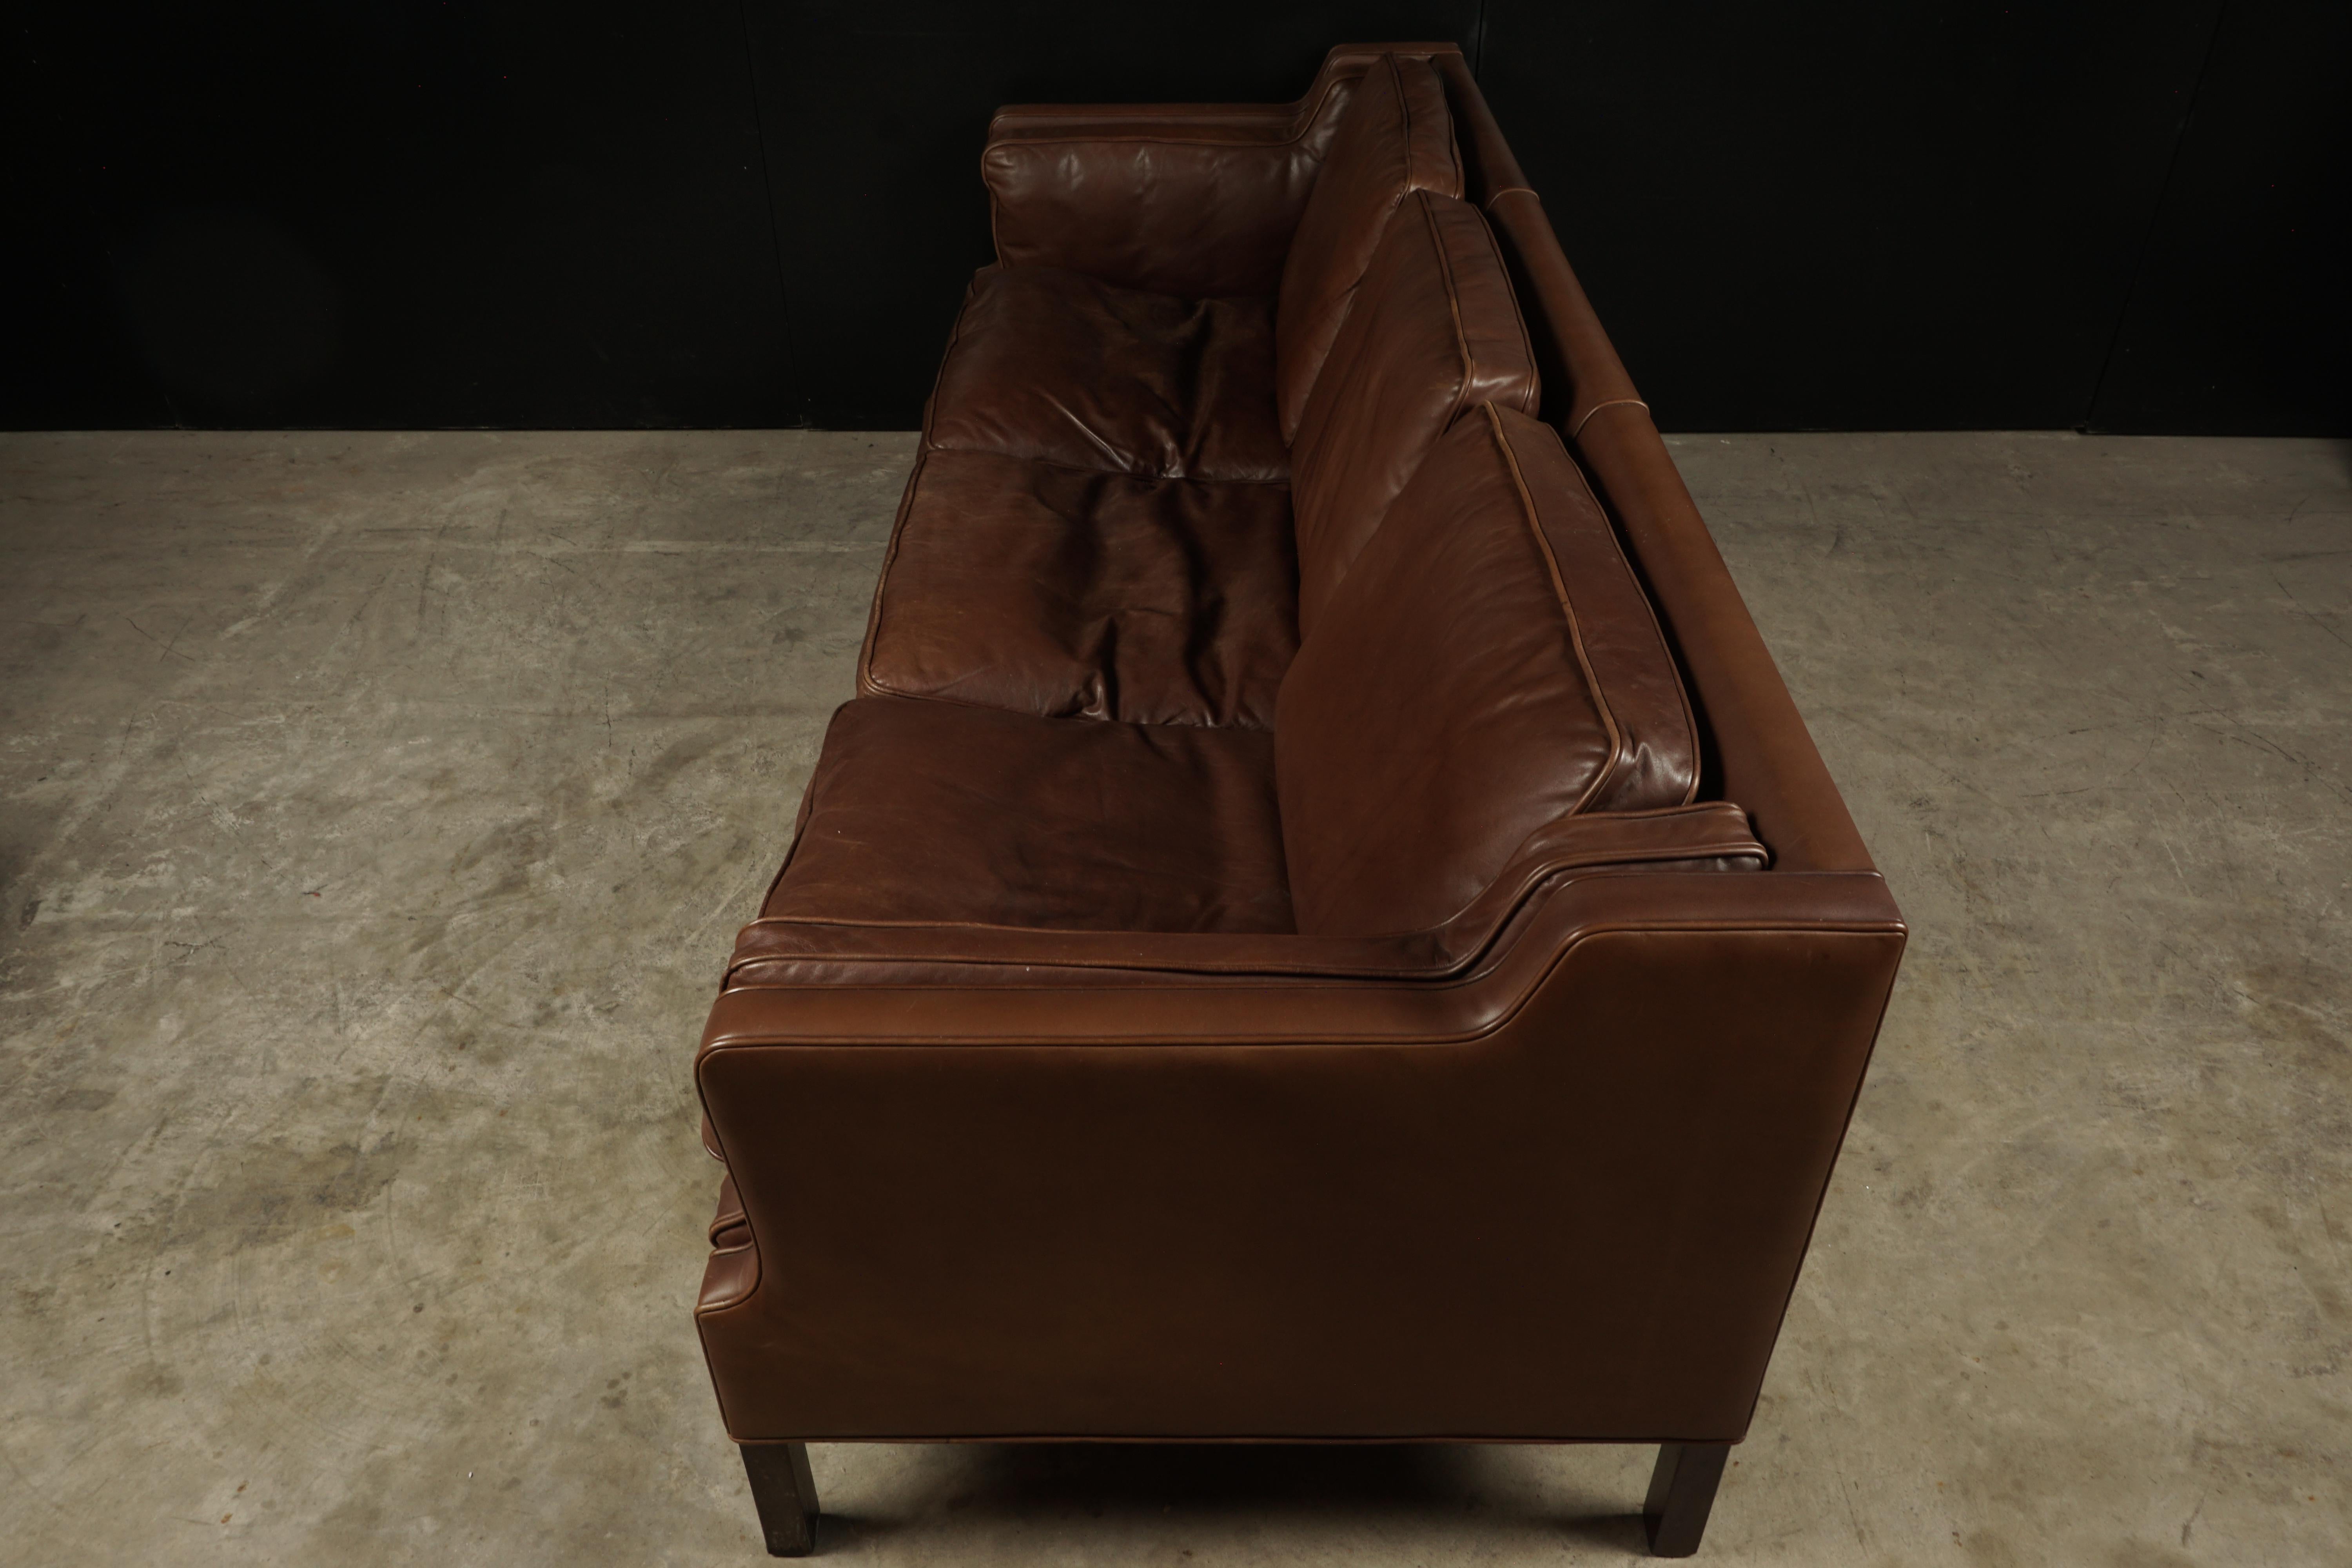 European Midcentury Brown Leather Sofa from Denmark, circa 1970